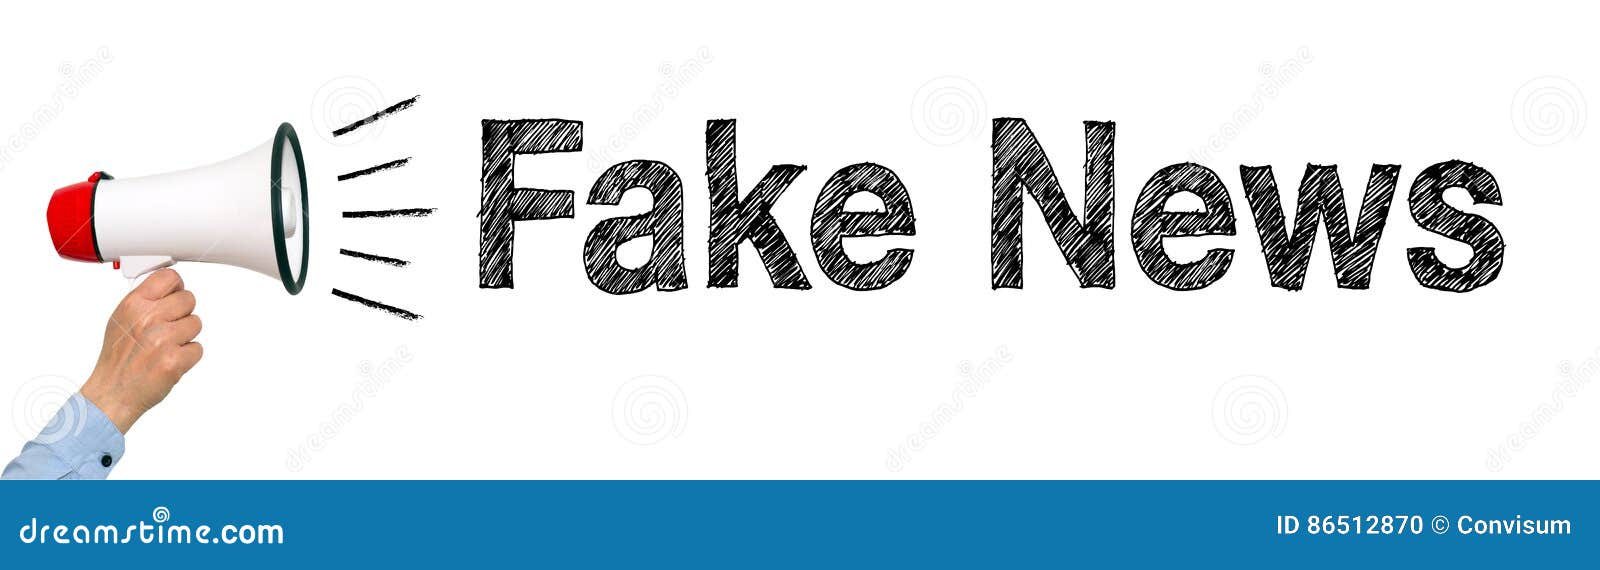 fake news megaphone